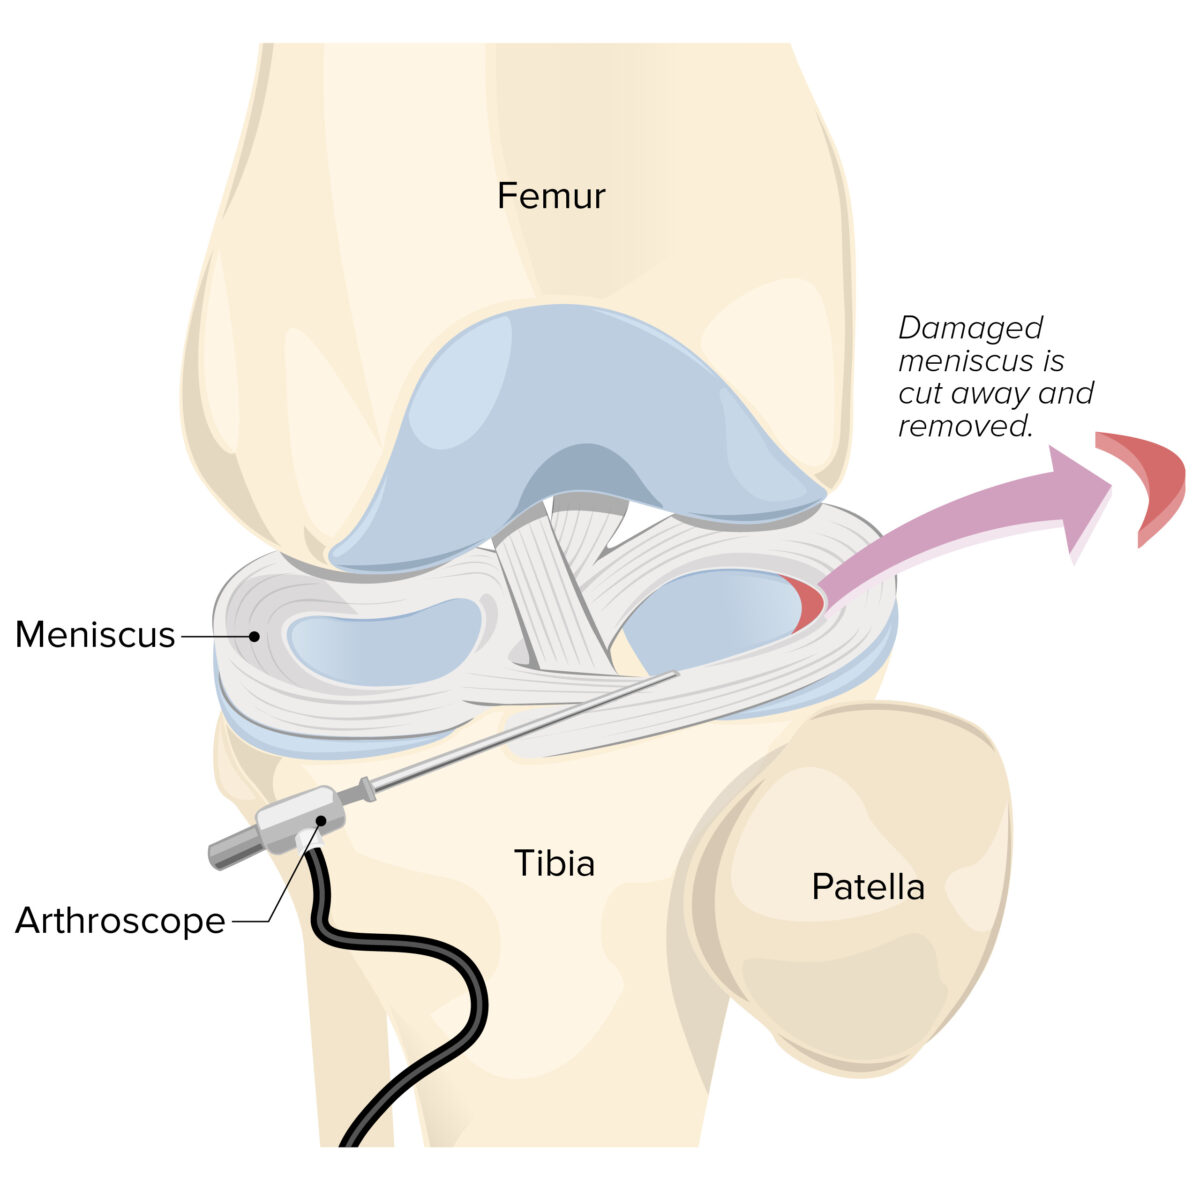 Knee arthroscopy with meniscectomy